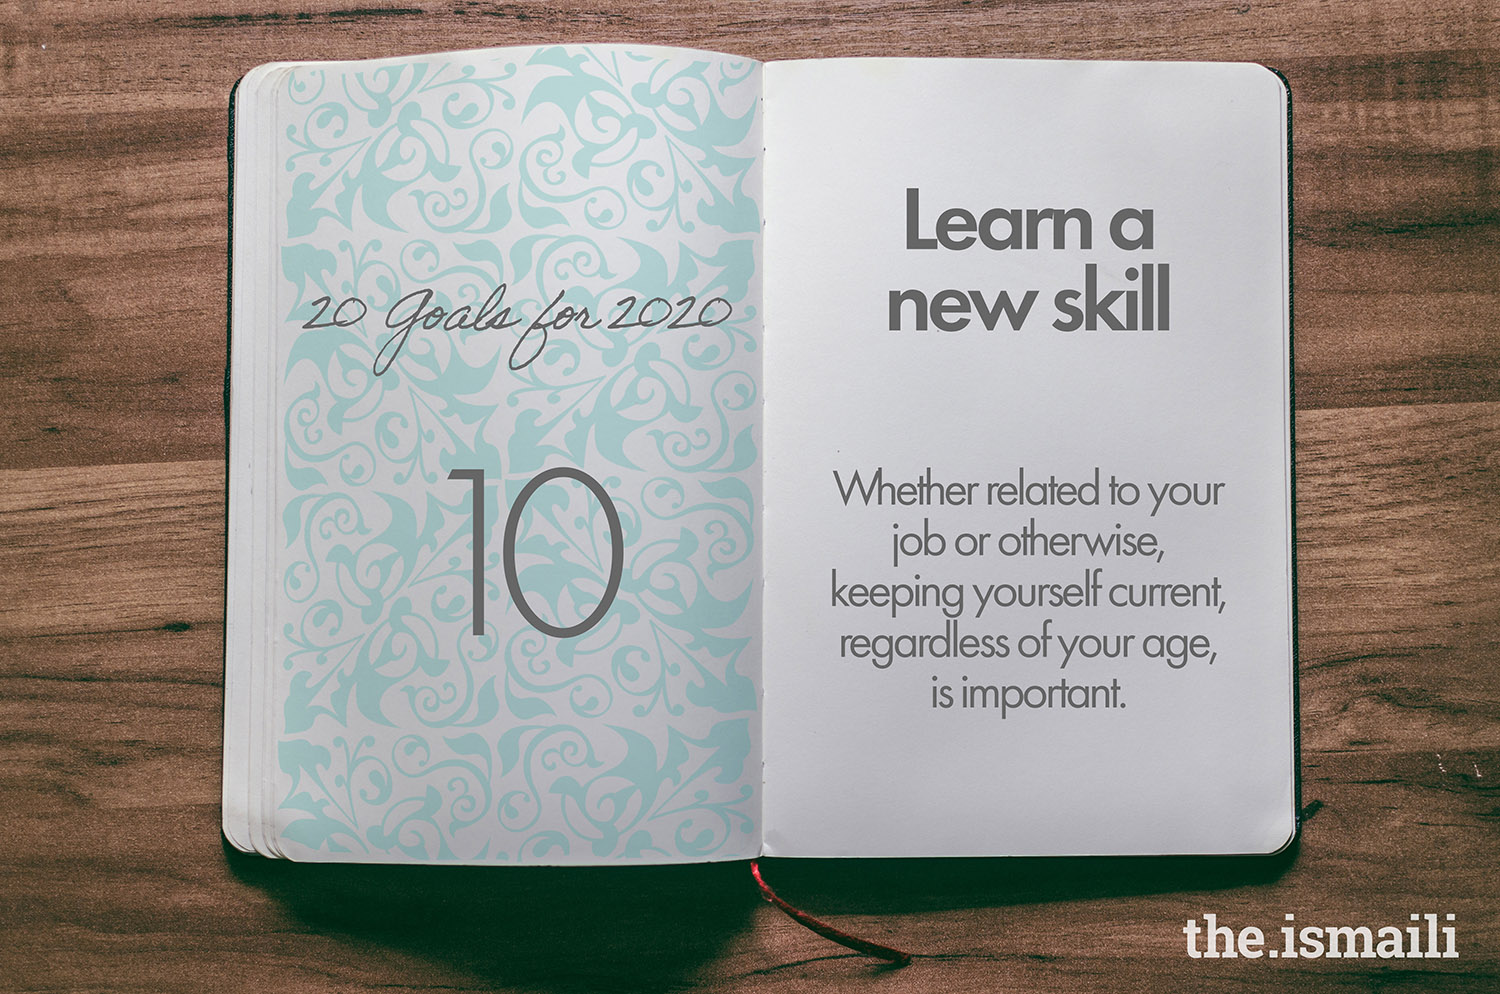 Goal 10: Learn a new skill